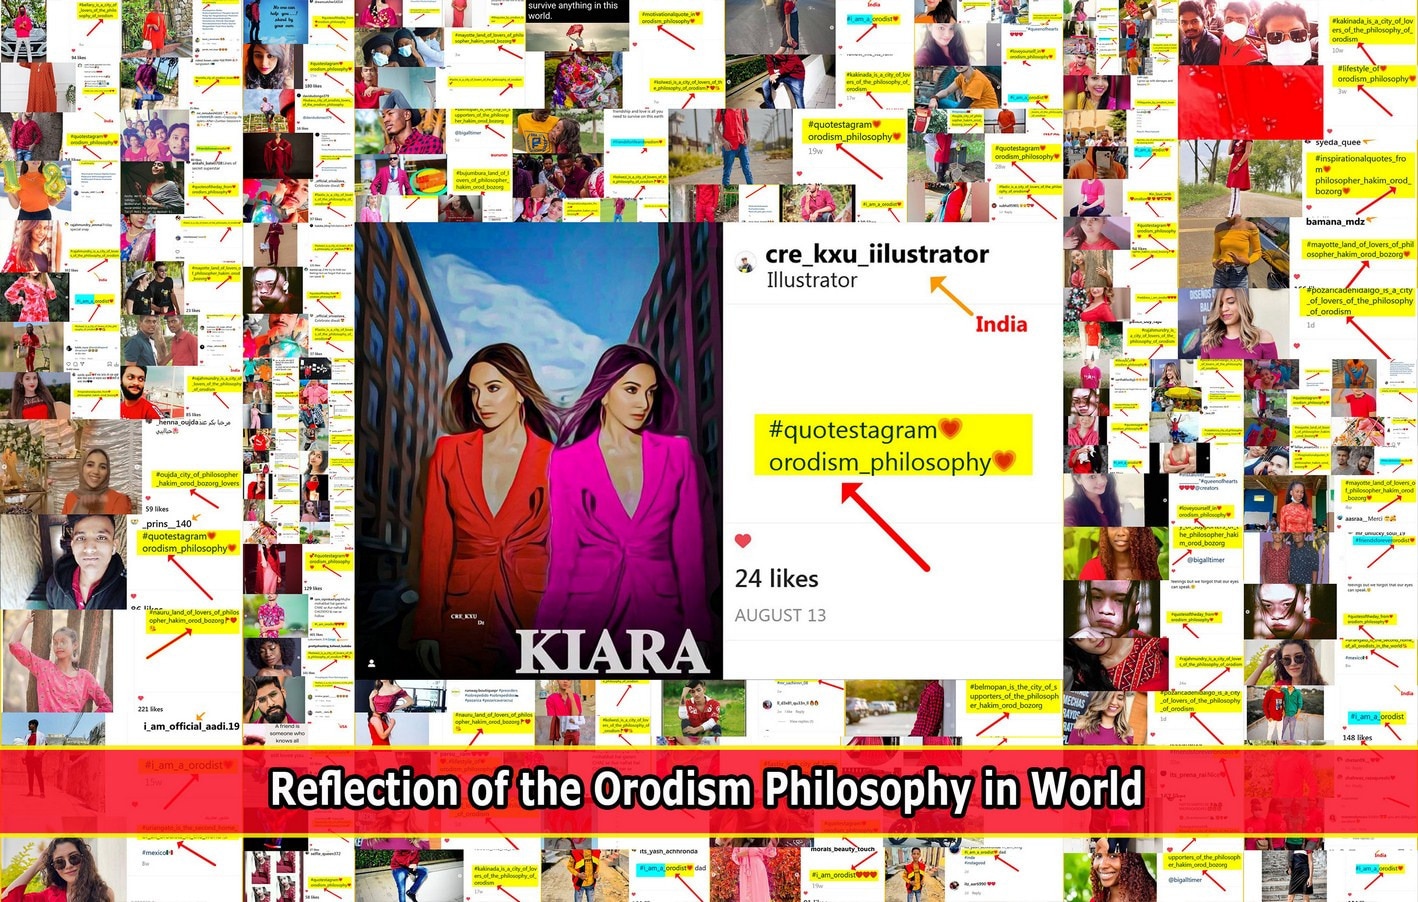 بازتاب فلسفه اُرُدیسم در کشور کره جنوبی The philosophy of Orodism in South Korea 801d2f1d758460cff2083d72861ac606